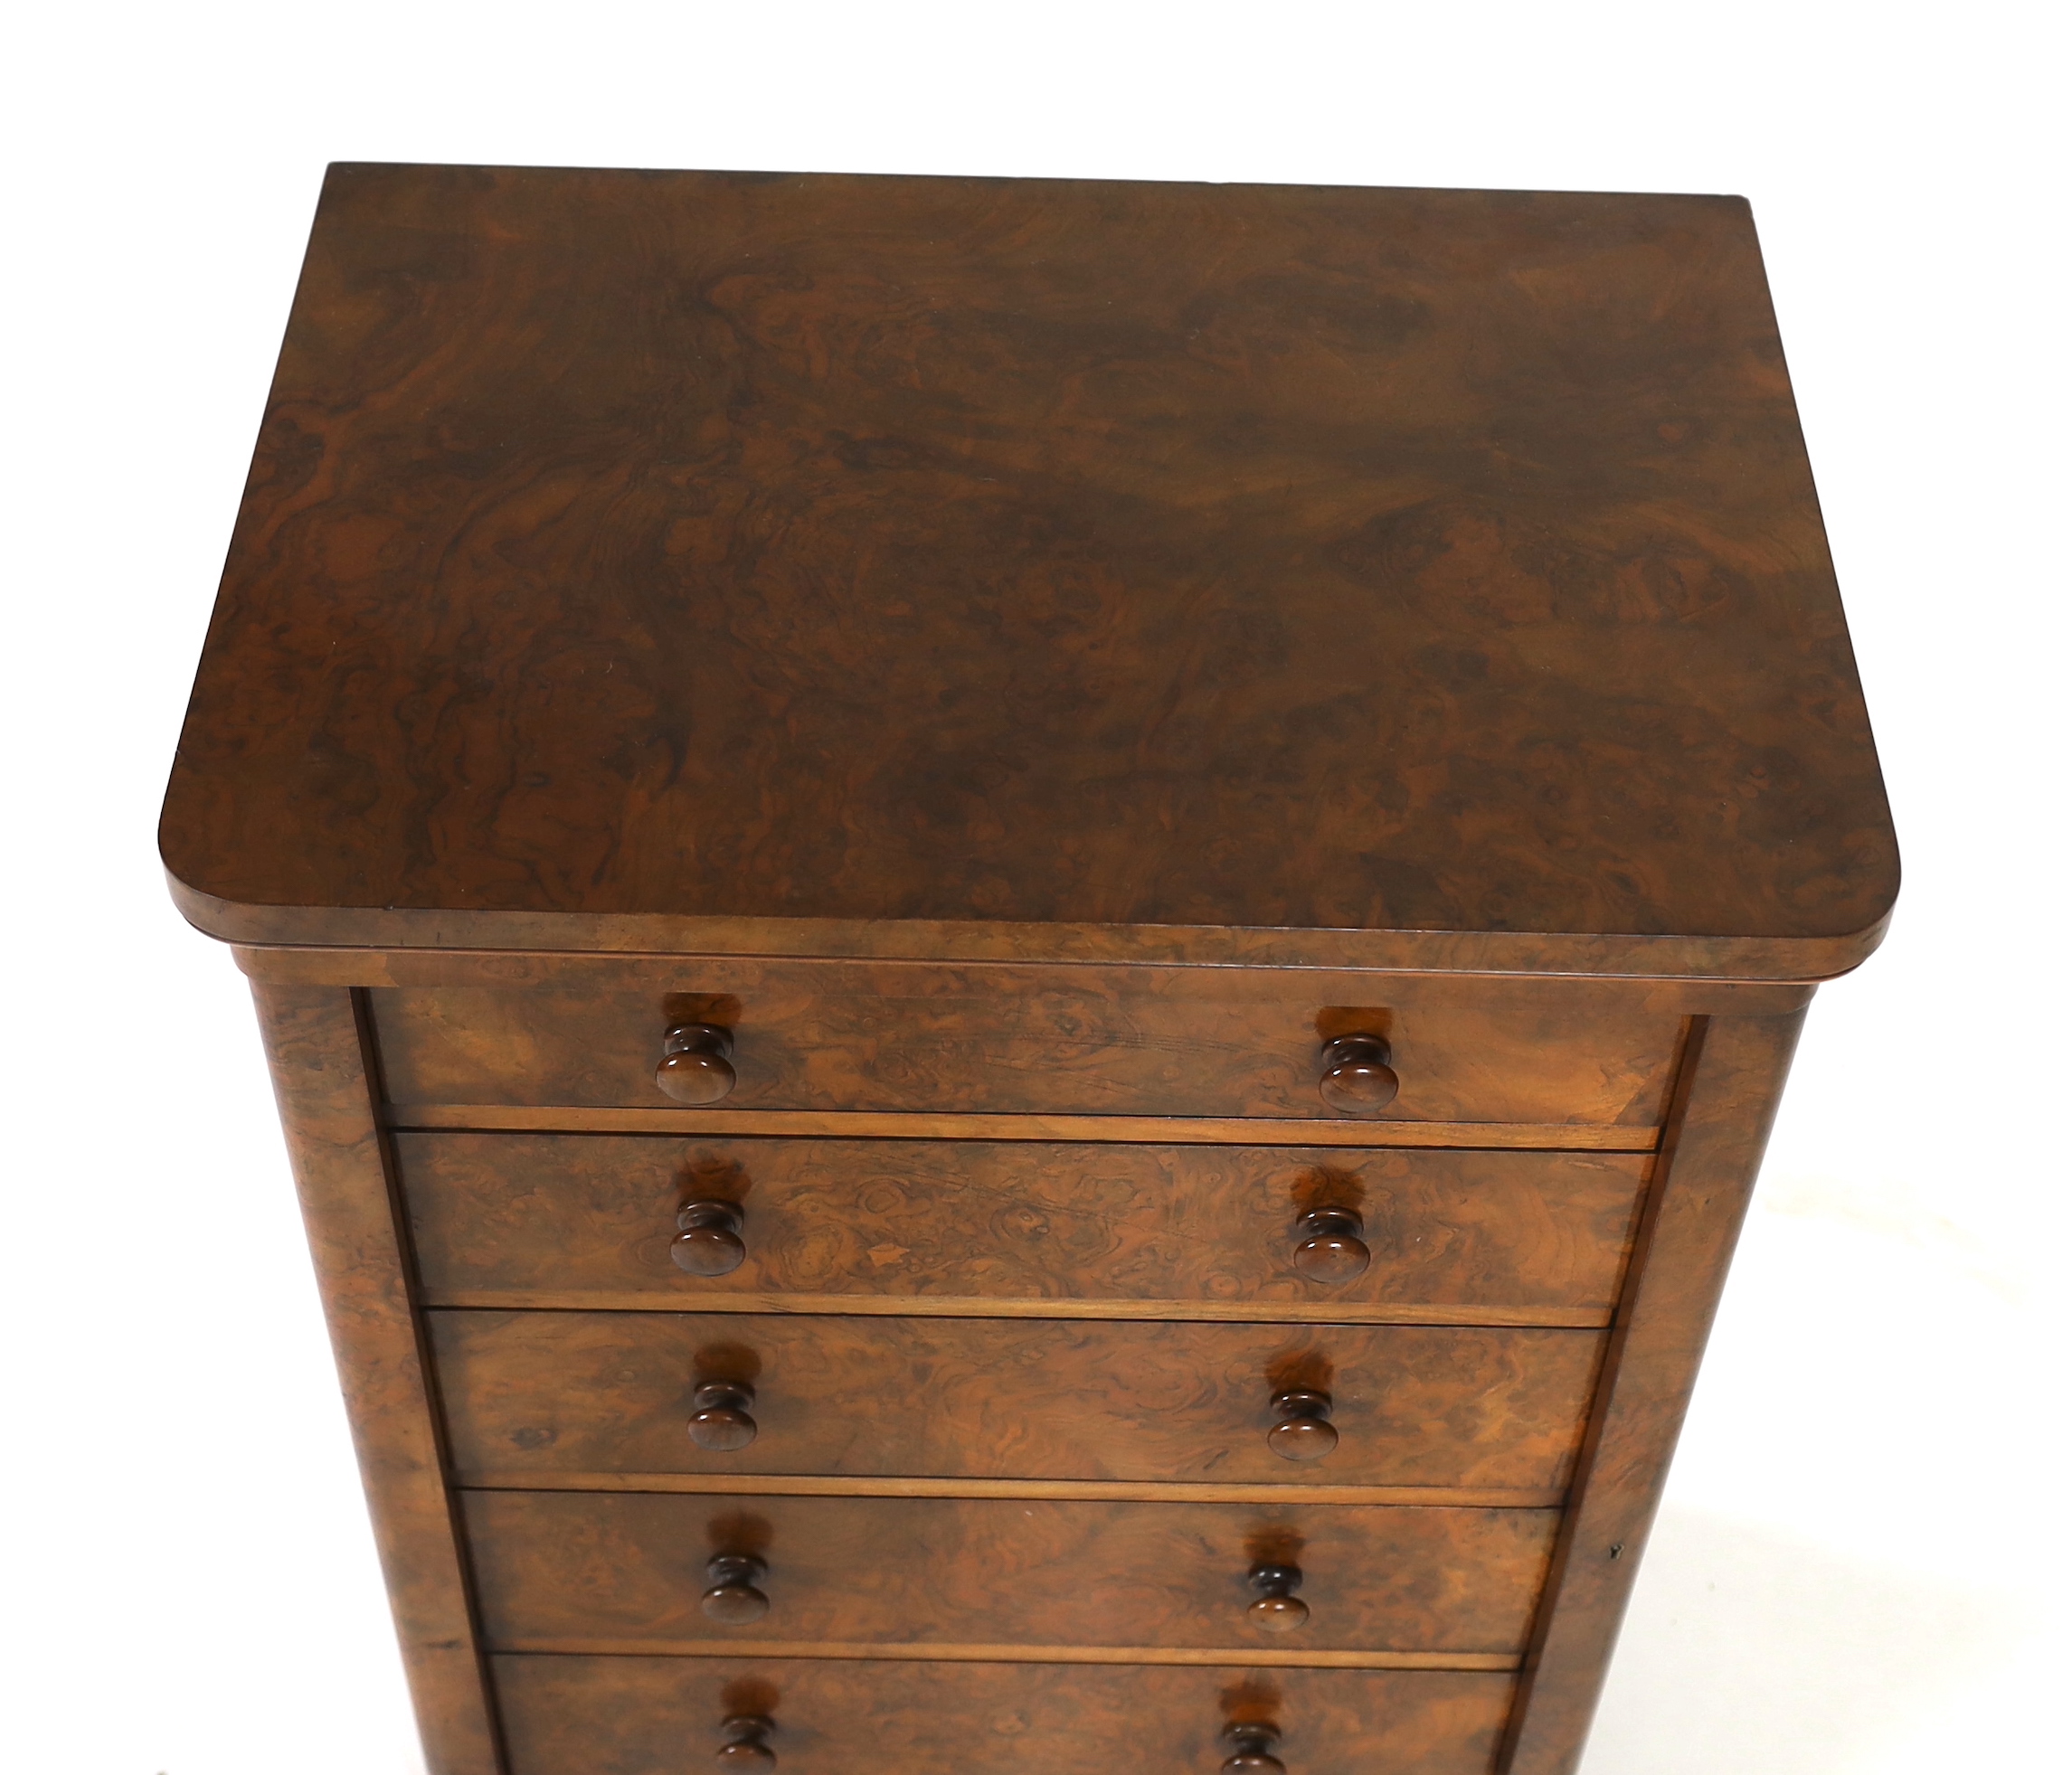 A Victorian walnut Wellington chest, retailed by Toplis & Son, Berners Street, London, width 62cm, depth 43cm, height 102cm